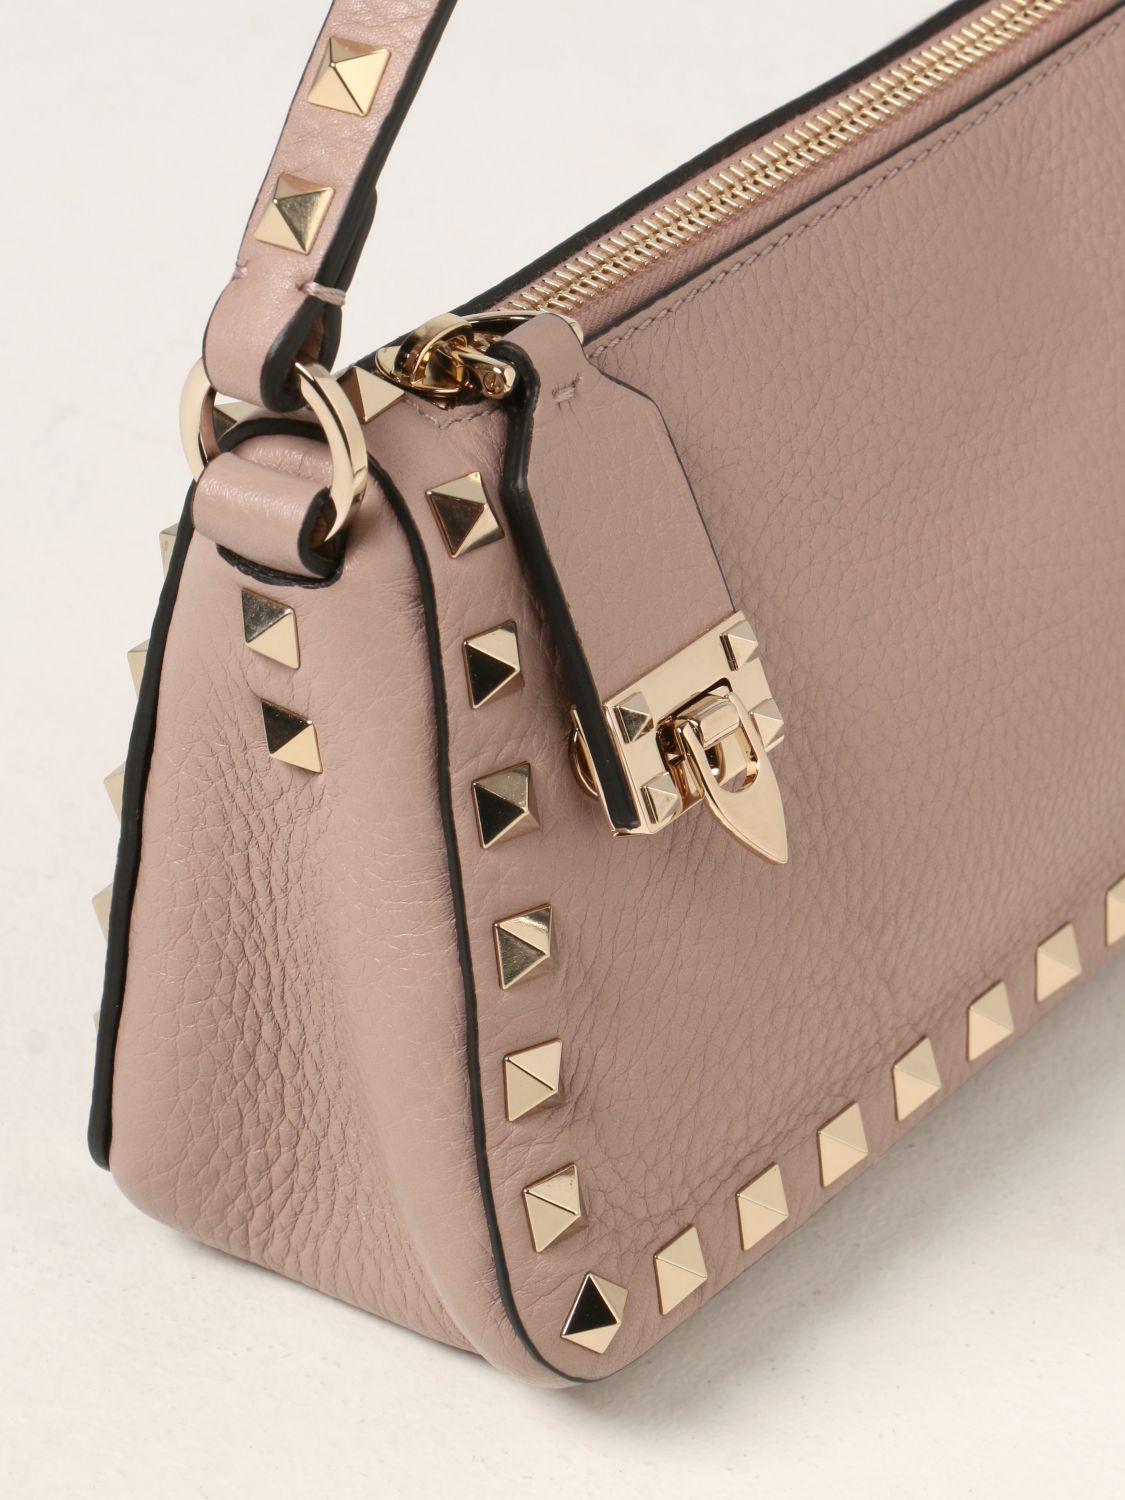 VALENTINO GARAVANI: Rockstud bag in grained leather - Pink  Valentino  Garavani mini bag 2W0P0W07VSH online at